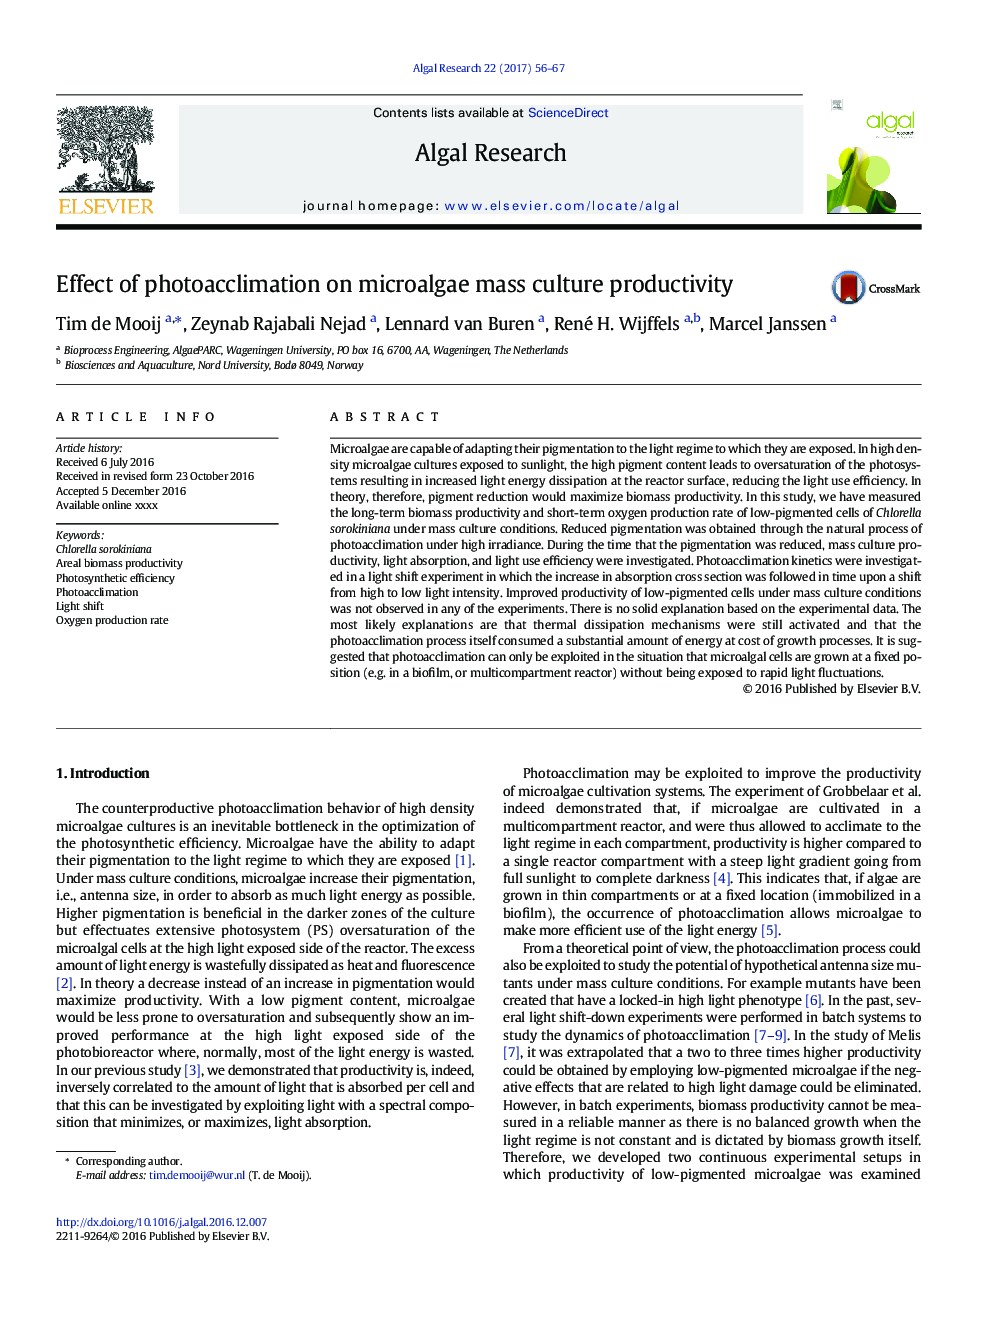 Effect of photoacclimation on microalgae mass culture productivity